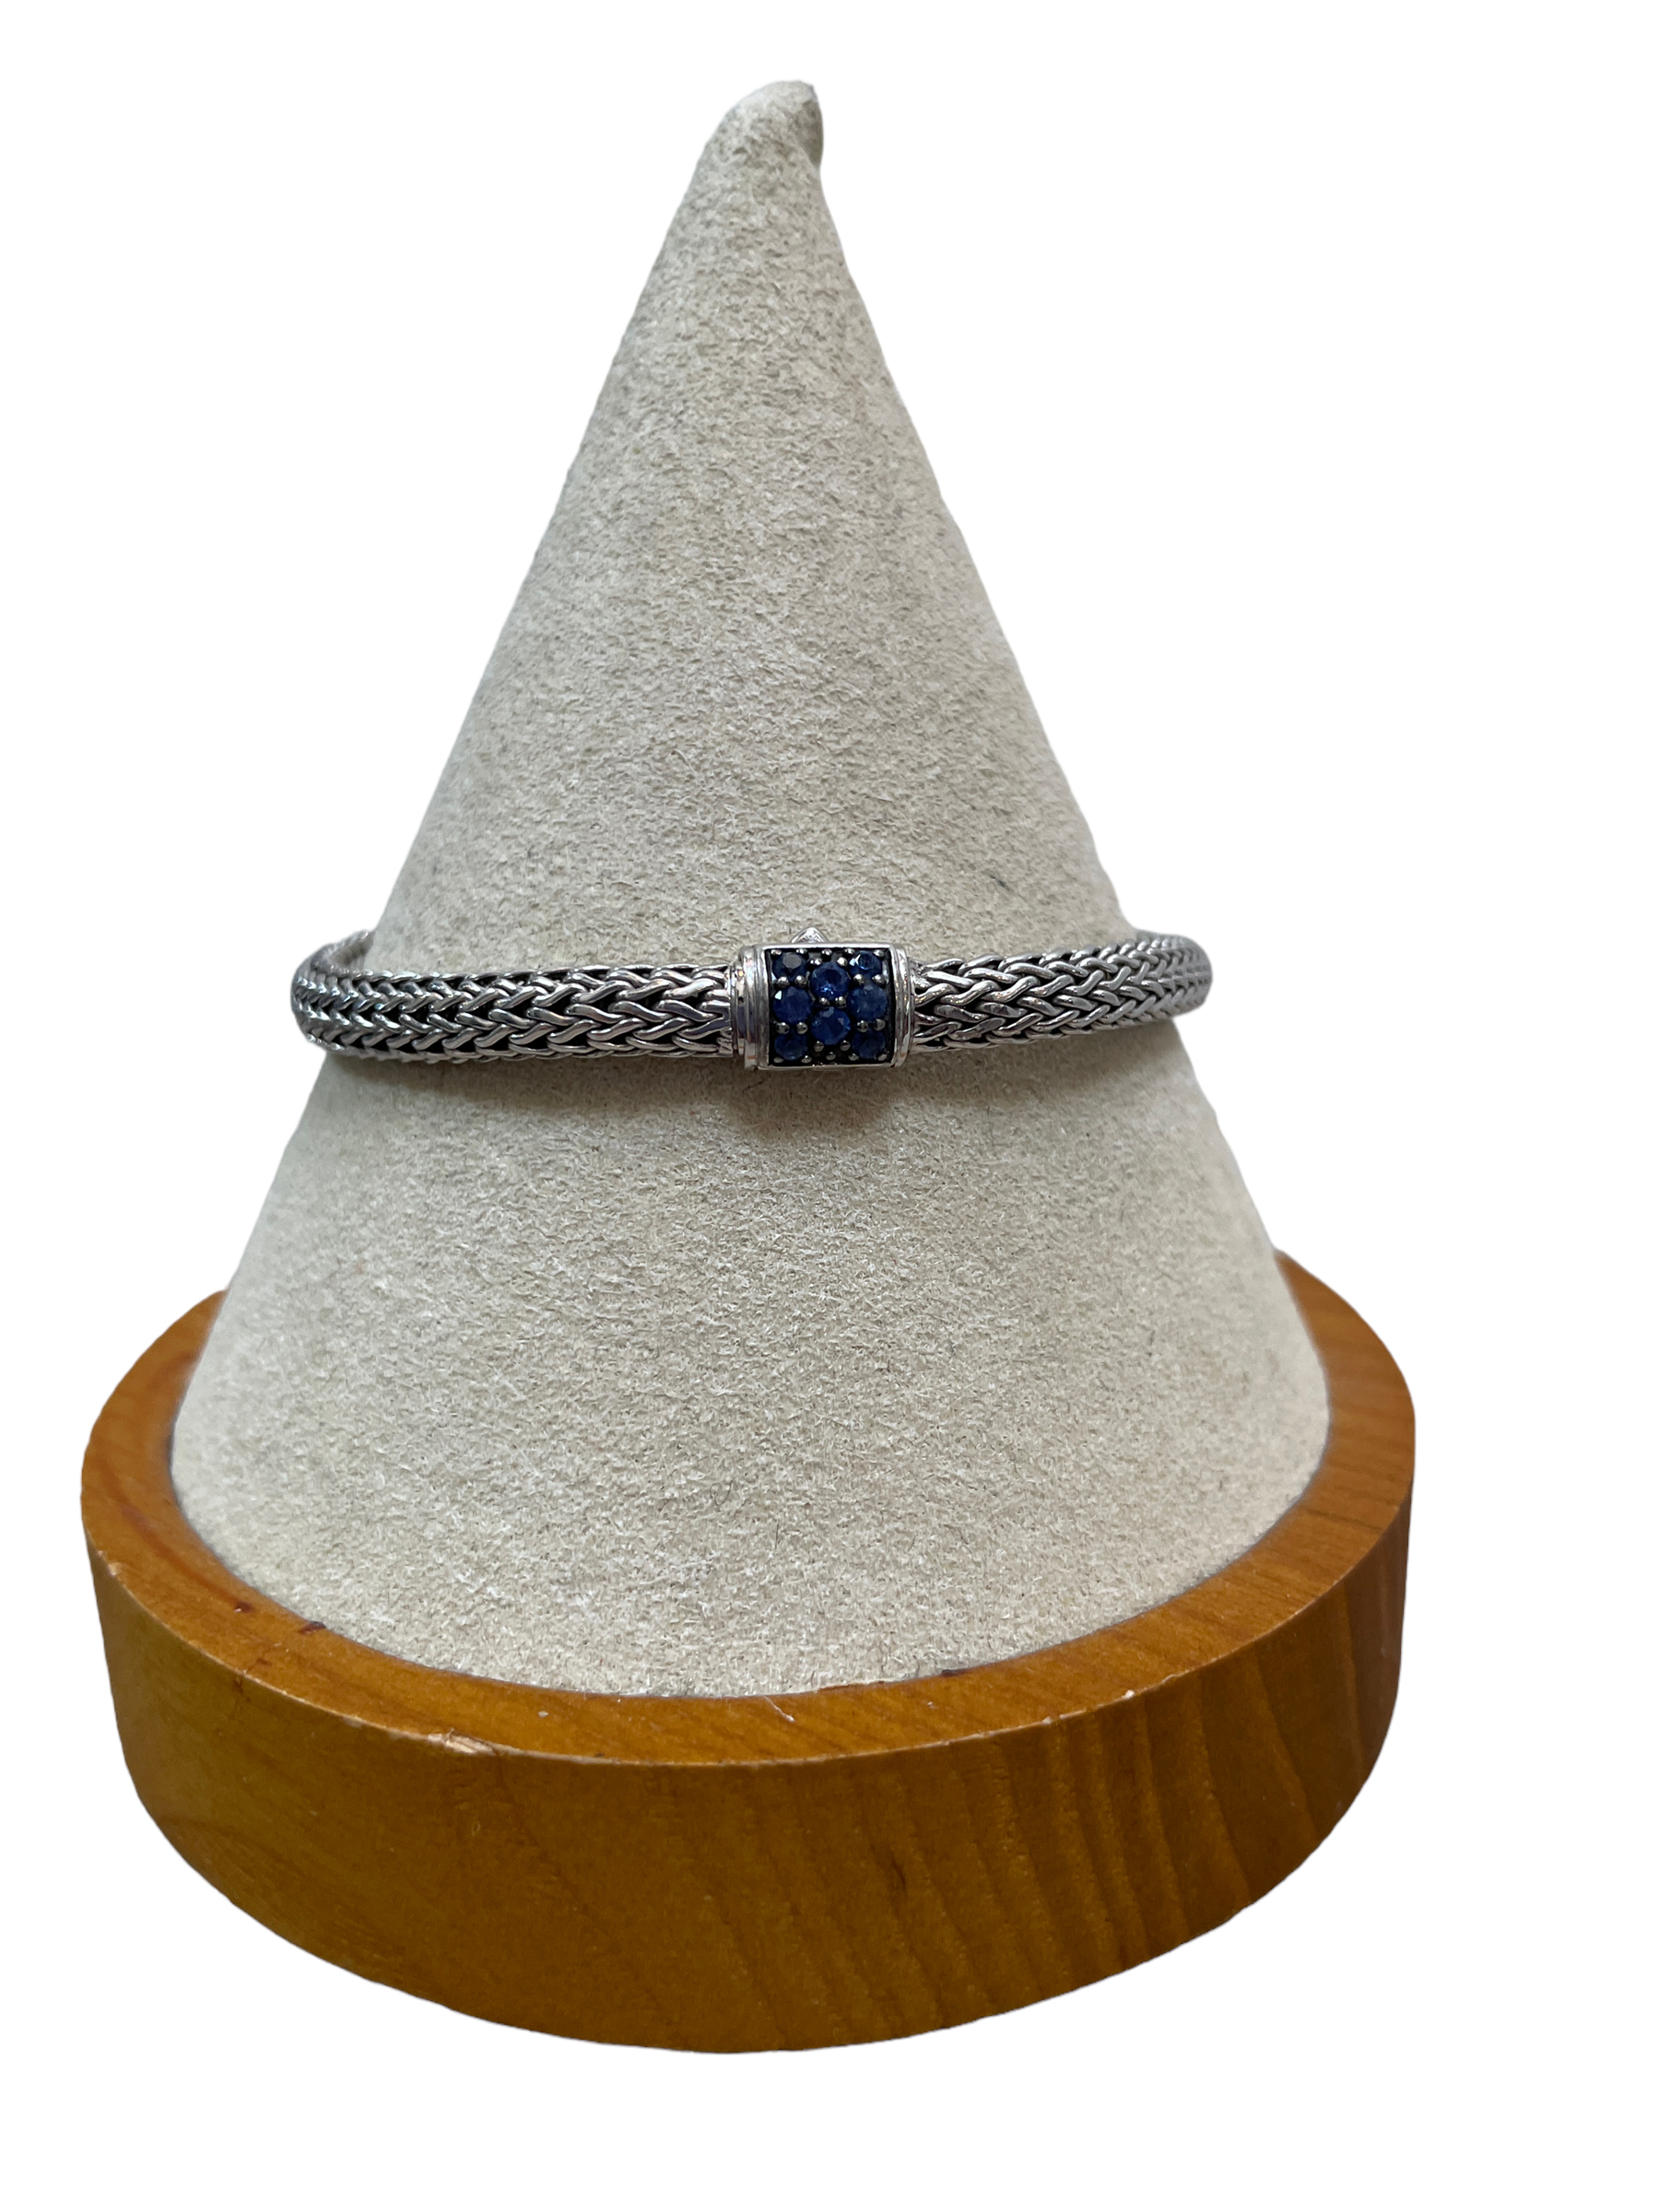 John Hardy Icon Blue Sapphire Bracelet<br />
6.5MM<br />
<br />
sterling silver<br />
blue sapphire<br />
<br />
CURRENT ONLINE<br />
retail: $995